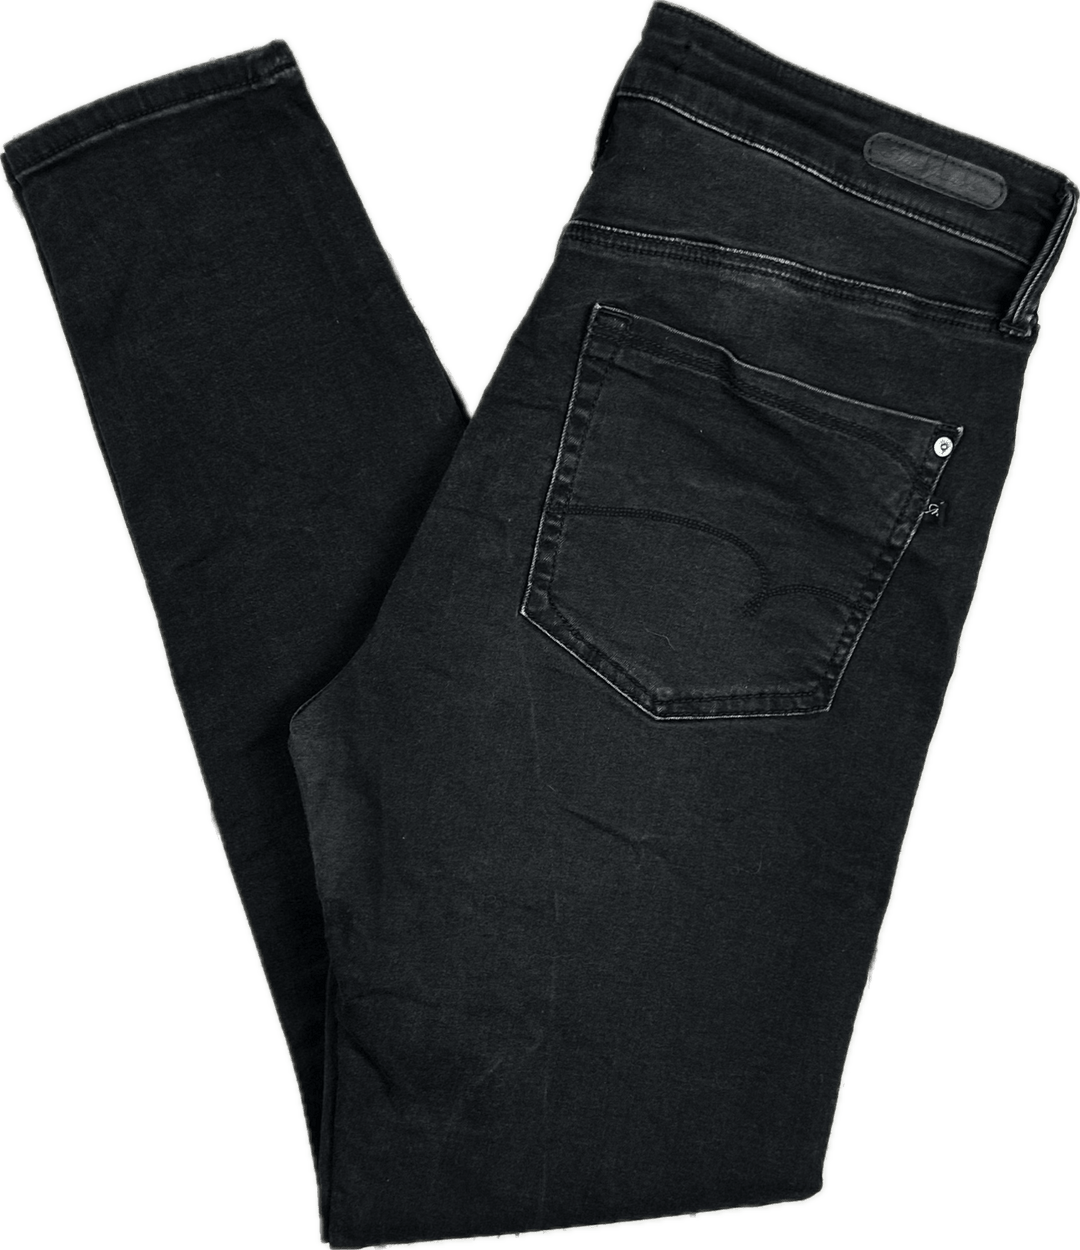 Mavi 'Lucy' High Rise Super Skinny Black Jeans -Size 29/28 - Jean Pool